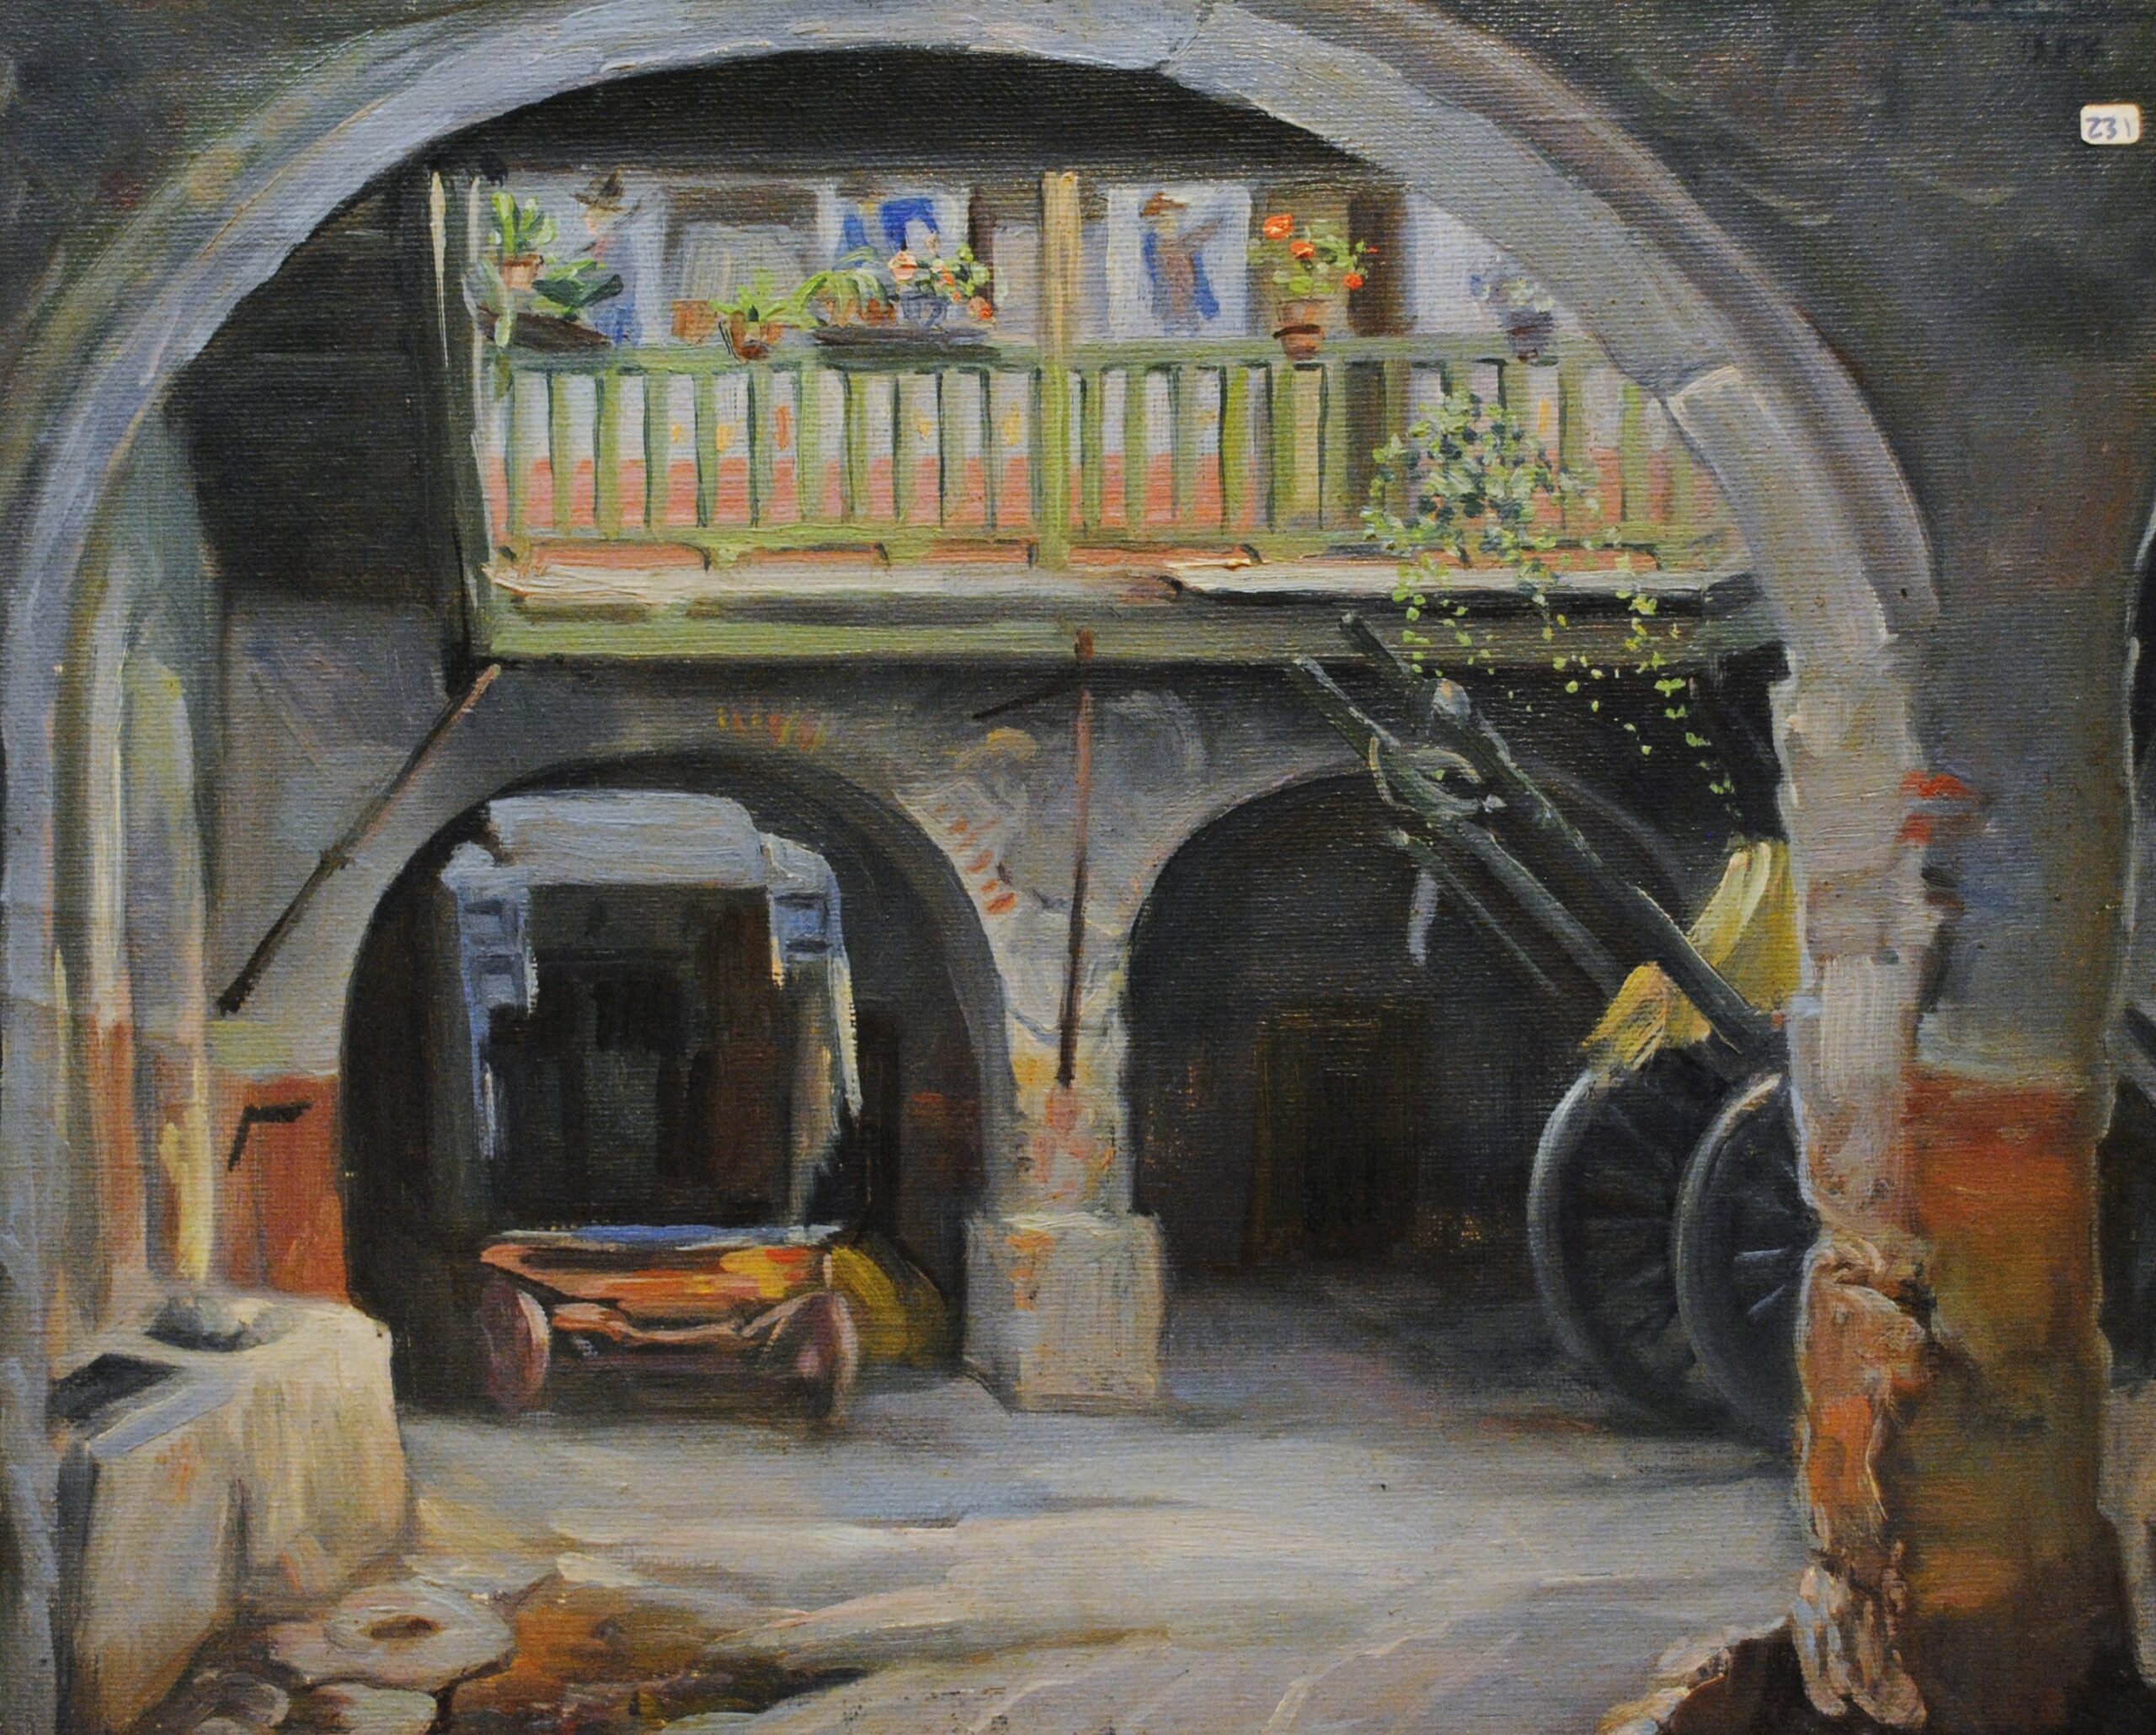 Pintura de José Manaut titulada Patio de posada, 1954. Óleo sobre lienzo.